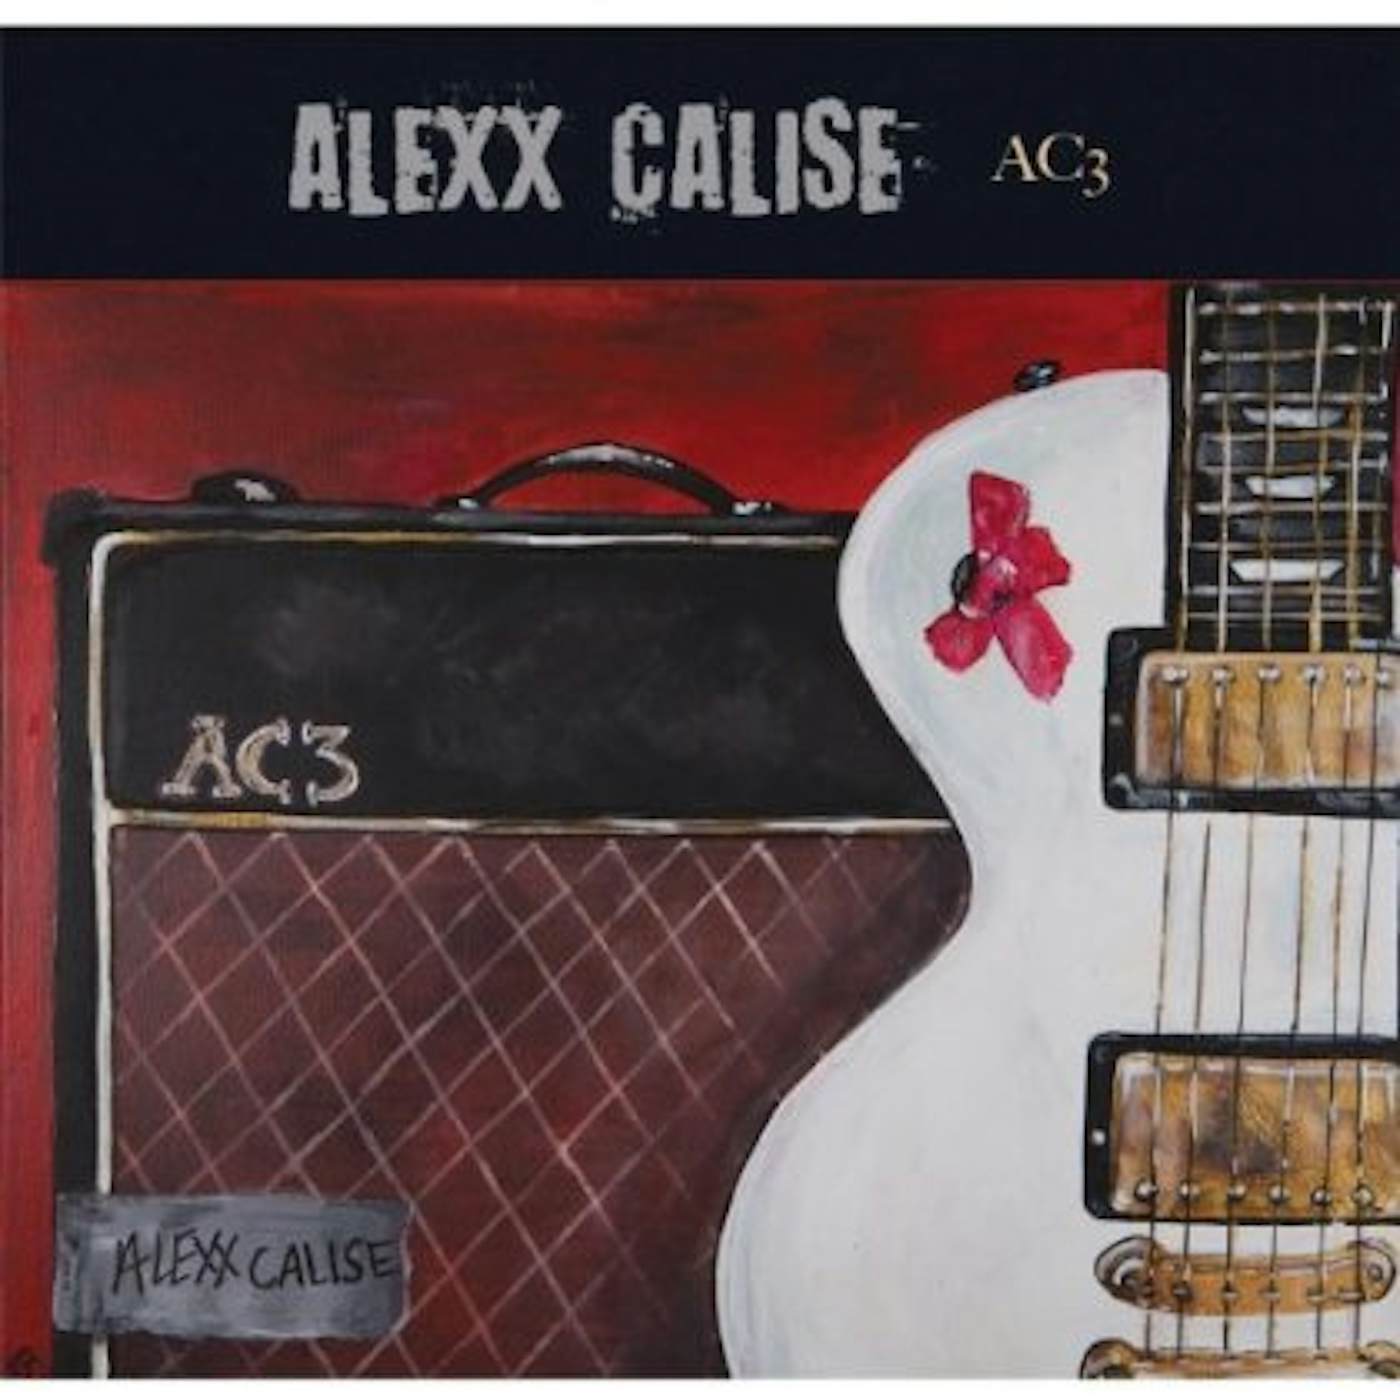 Alexx Calise AC3 CD